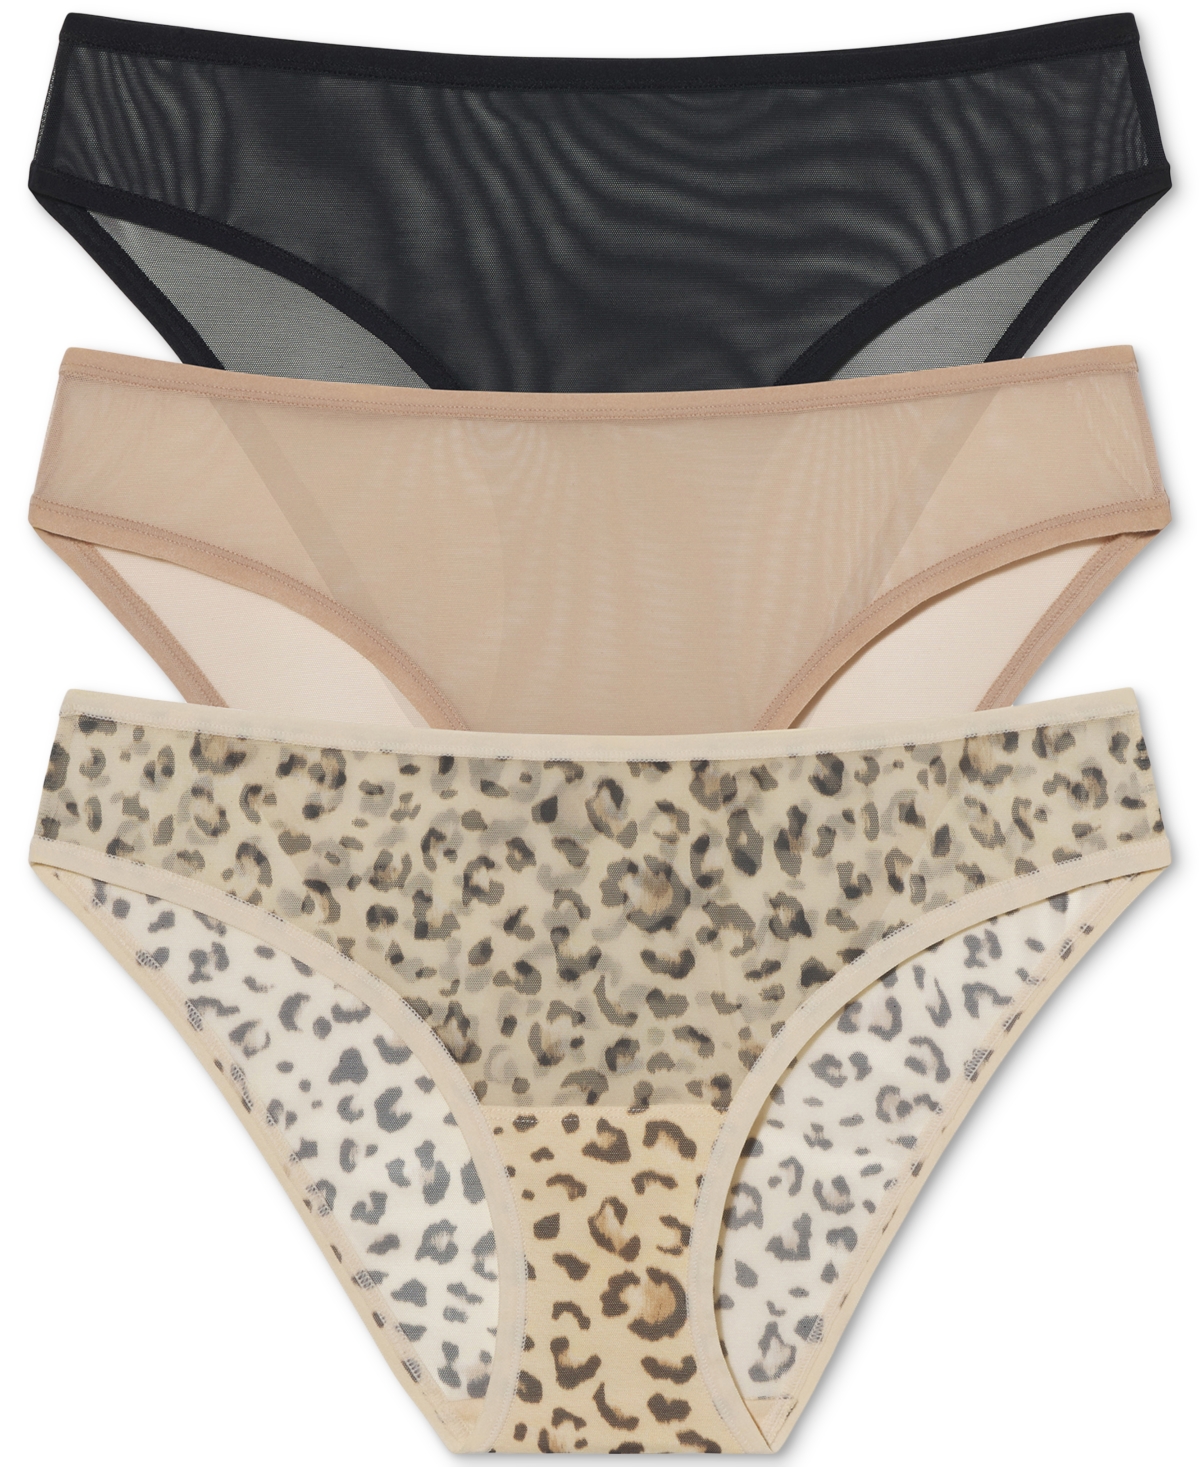 Women's Spellbound Bikini 3-Pack - Black/nylon/leo leopard